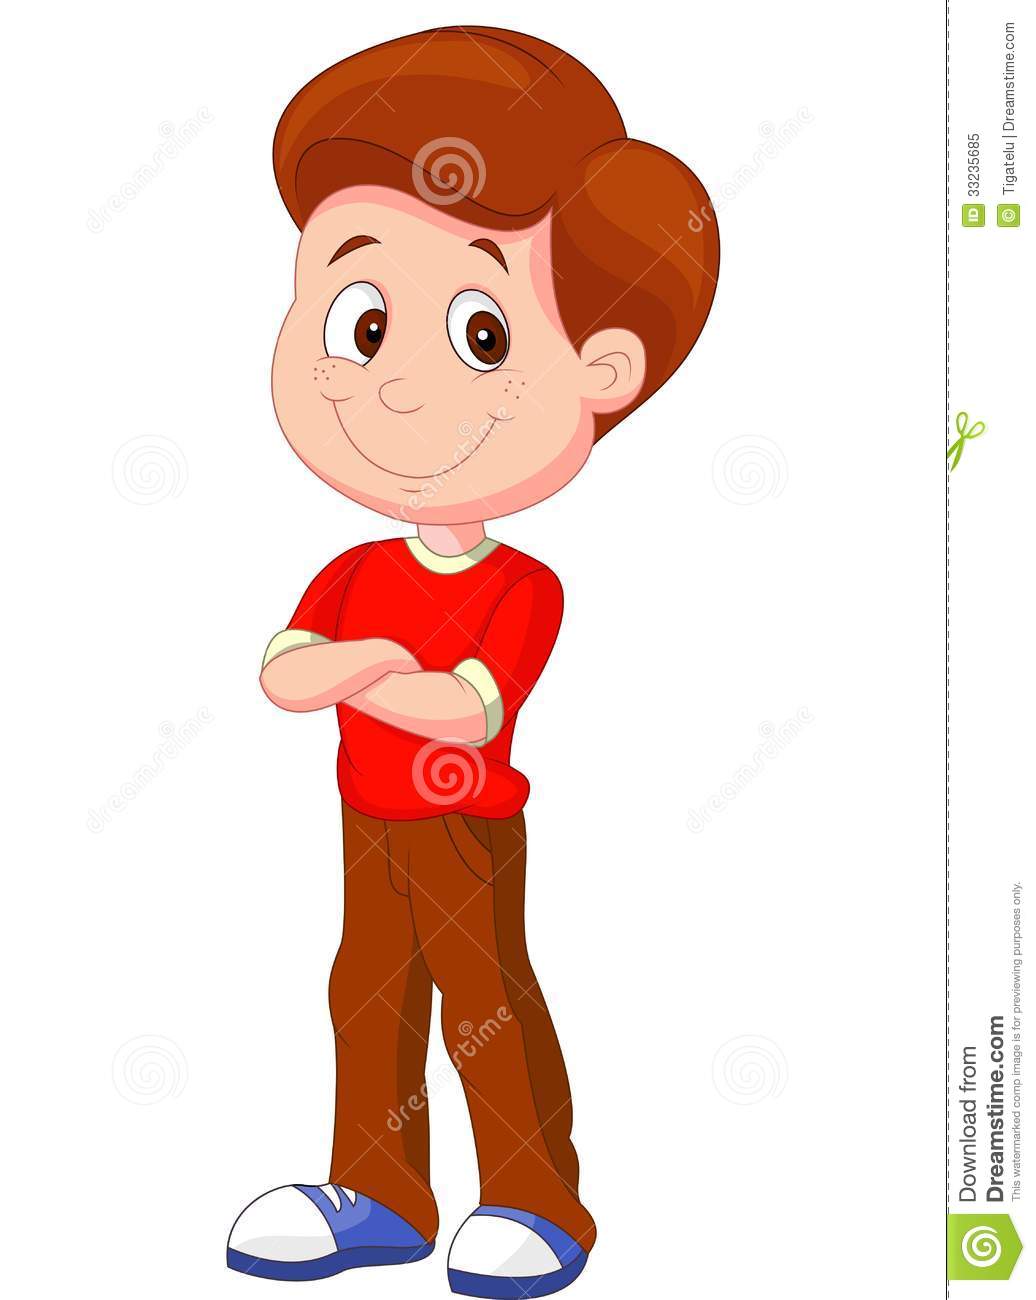 Cute Boy Cartoon Standing Royalty Free Stock Photo   Image  33235685